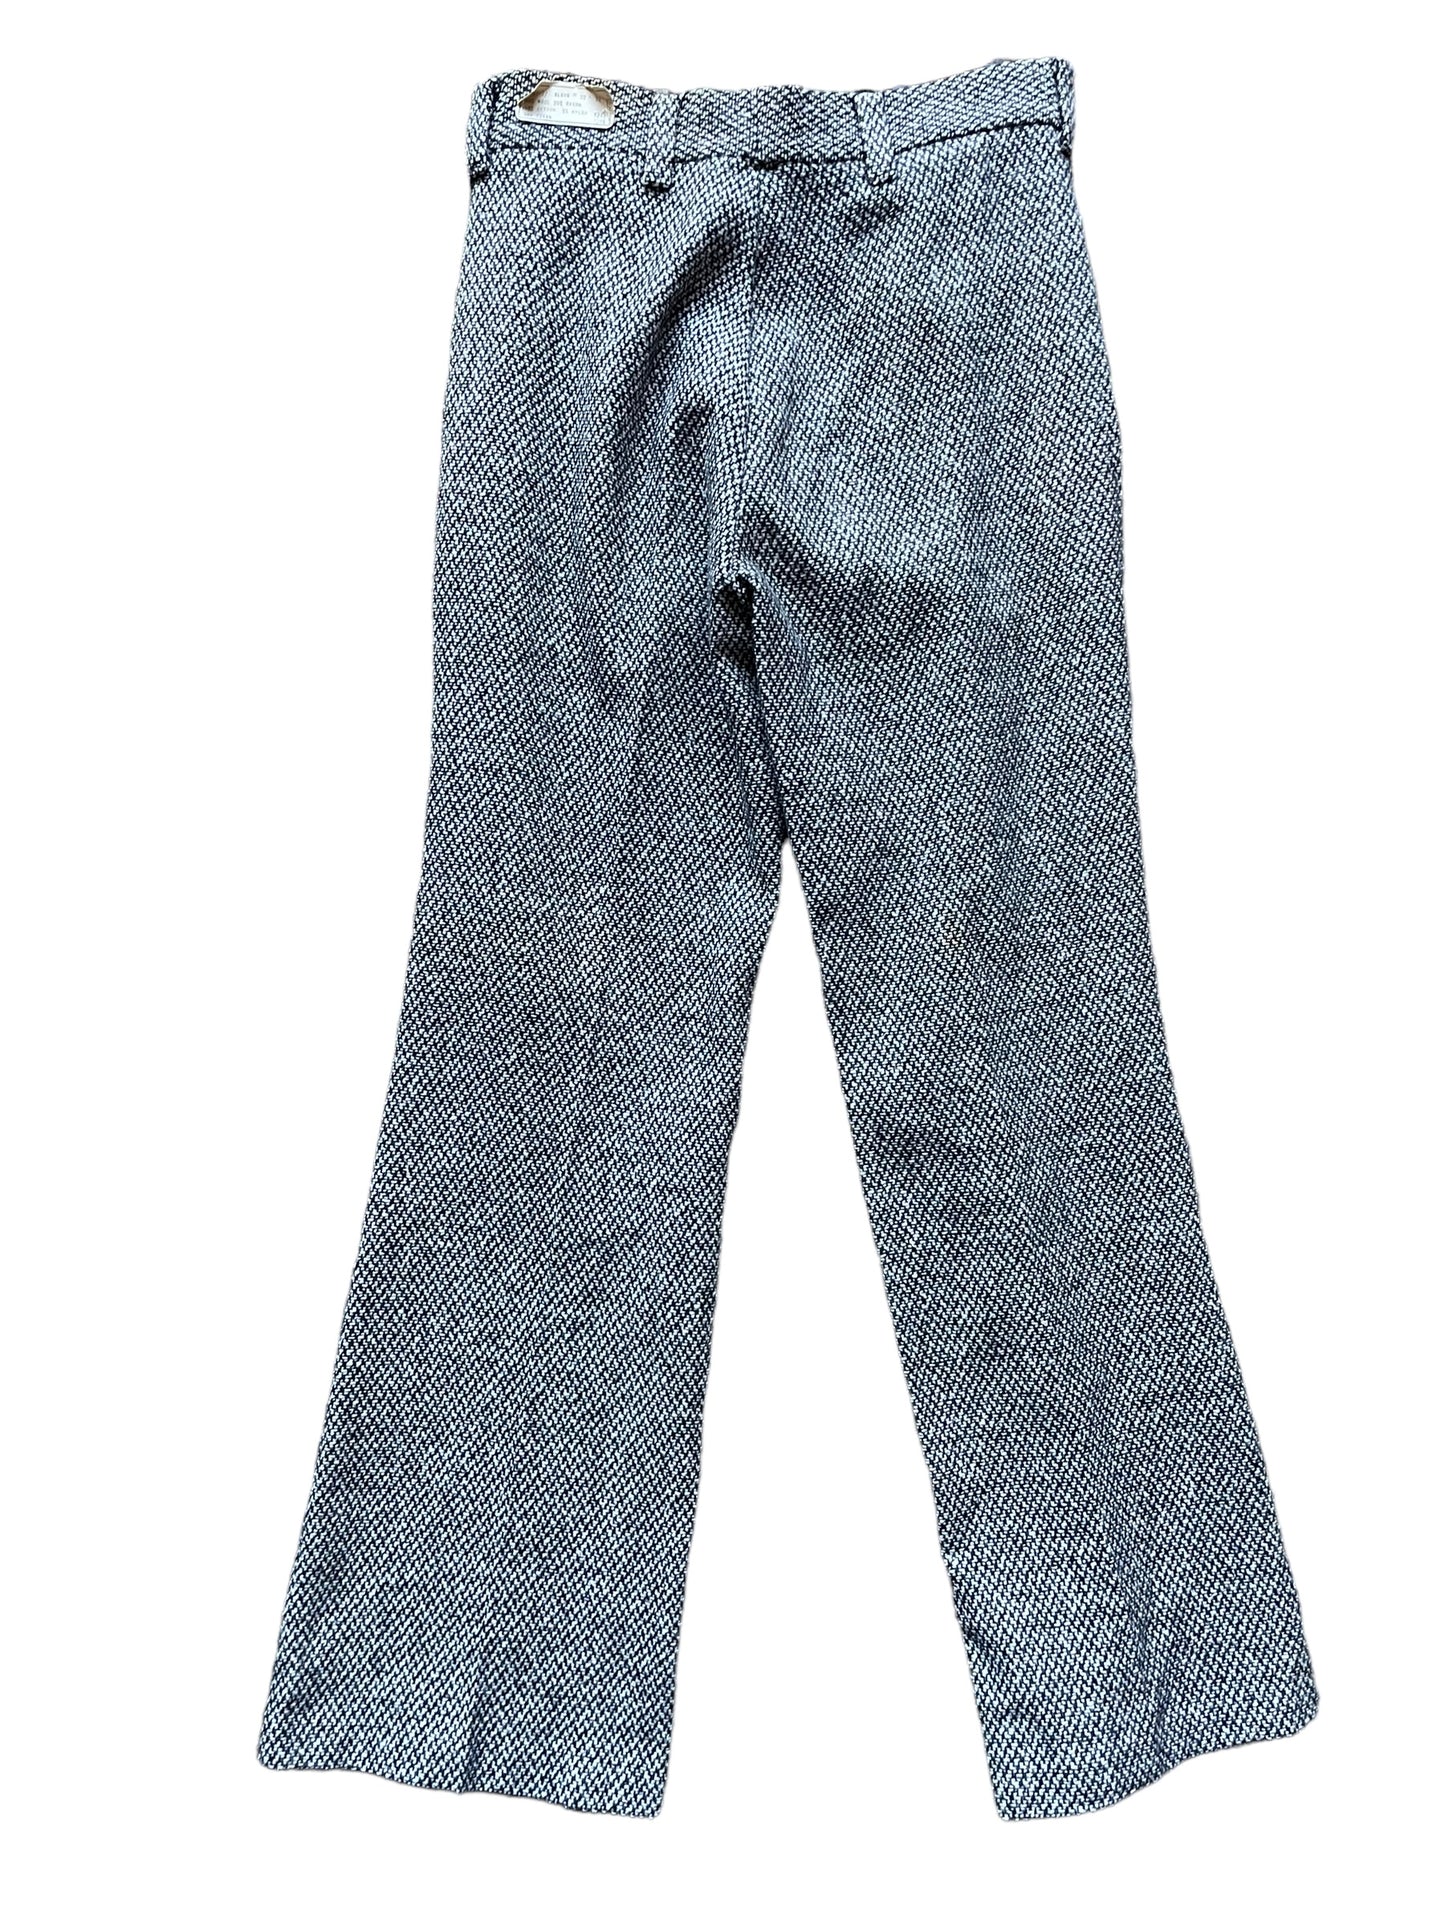 Full back view of Vintage 1970s Deadstock Wool Blend Tweed Trousers W30 | Barn Owl Vintage Seattle | Vintage Trousers